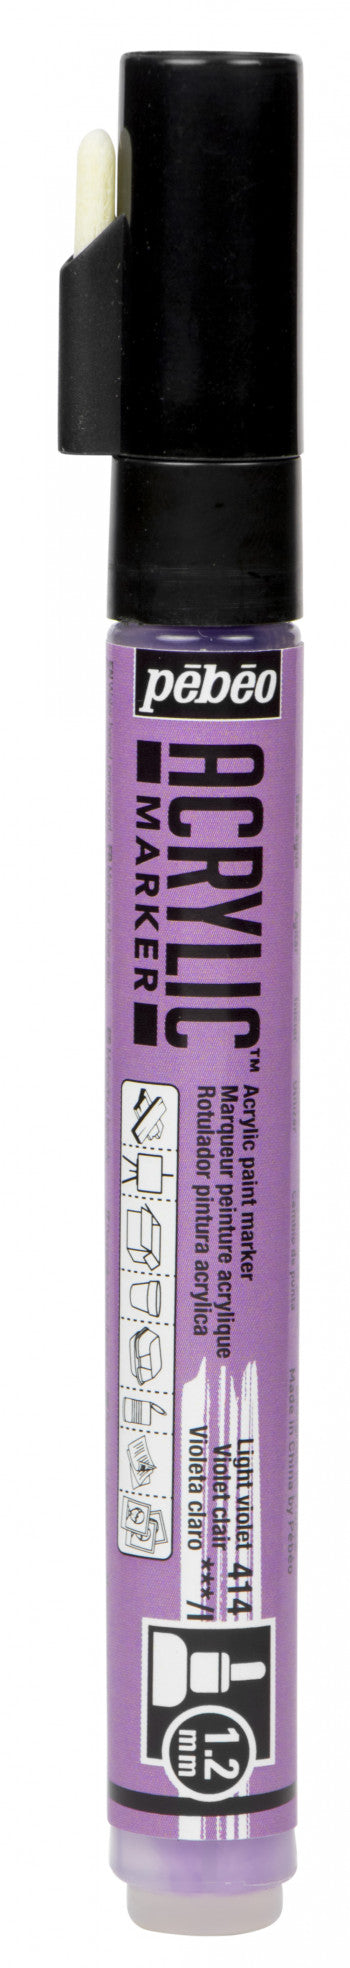 Acrylic Marker 1.2mm Pebeo Light purple